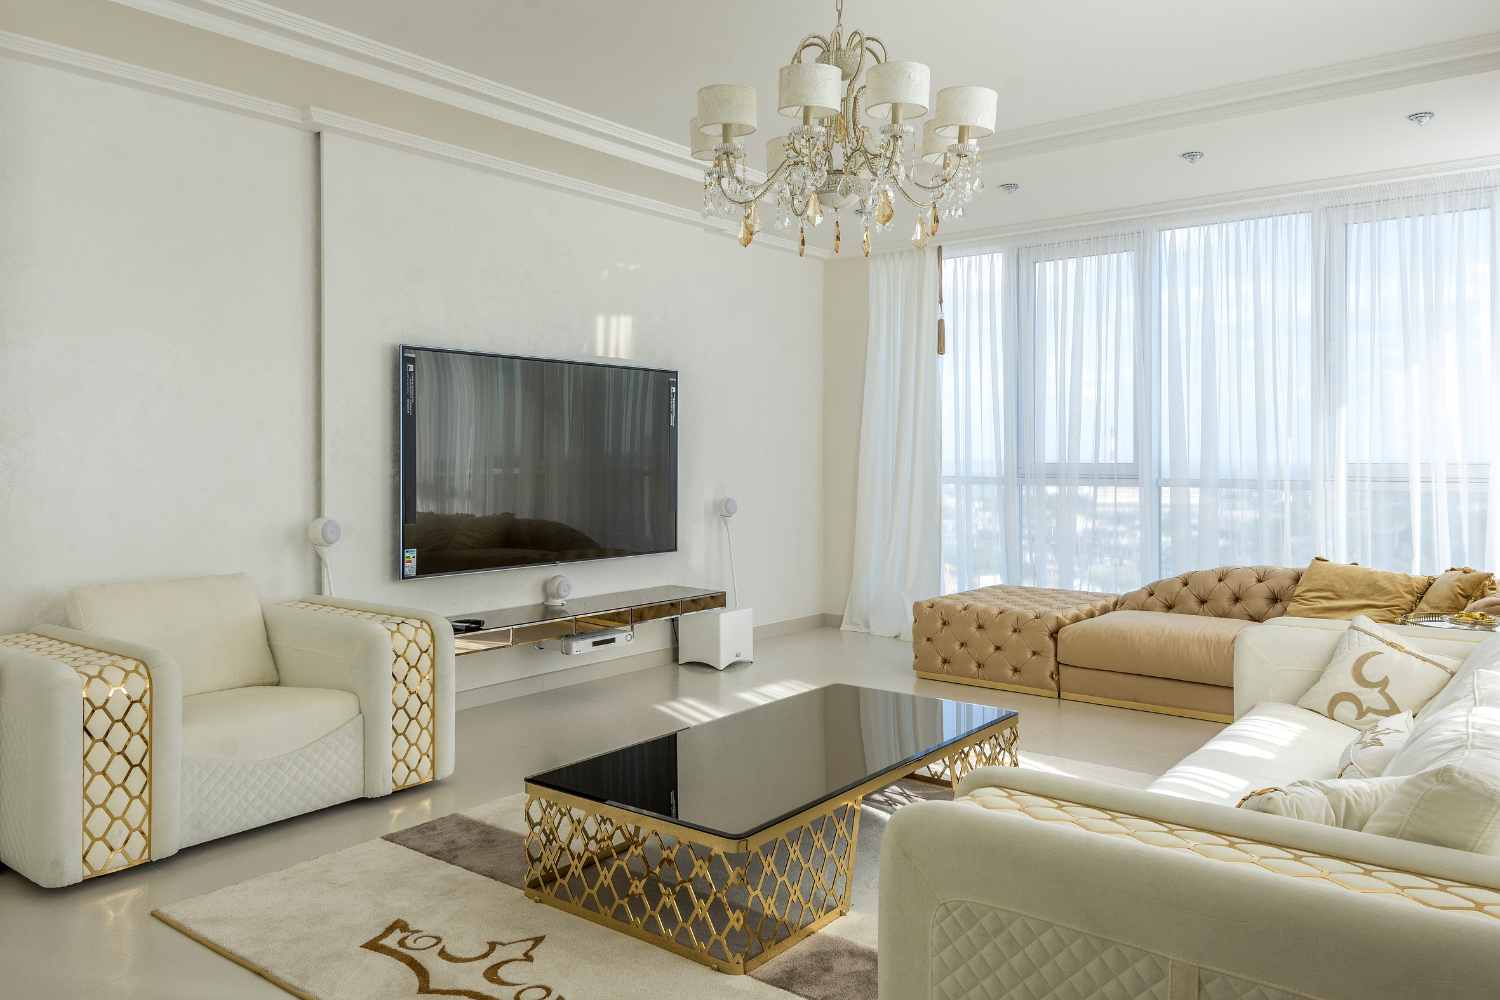 Max Estates Sector 128 Noida 4.5 Bedroom Luxury Flat